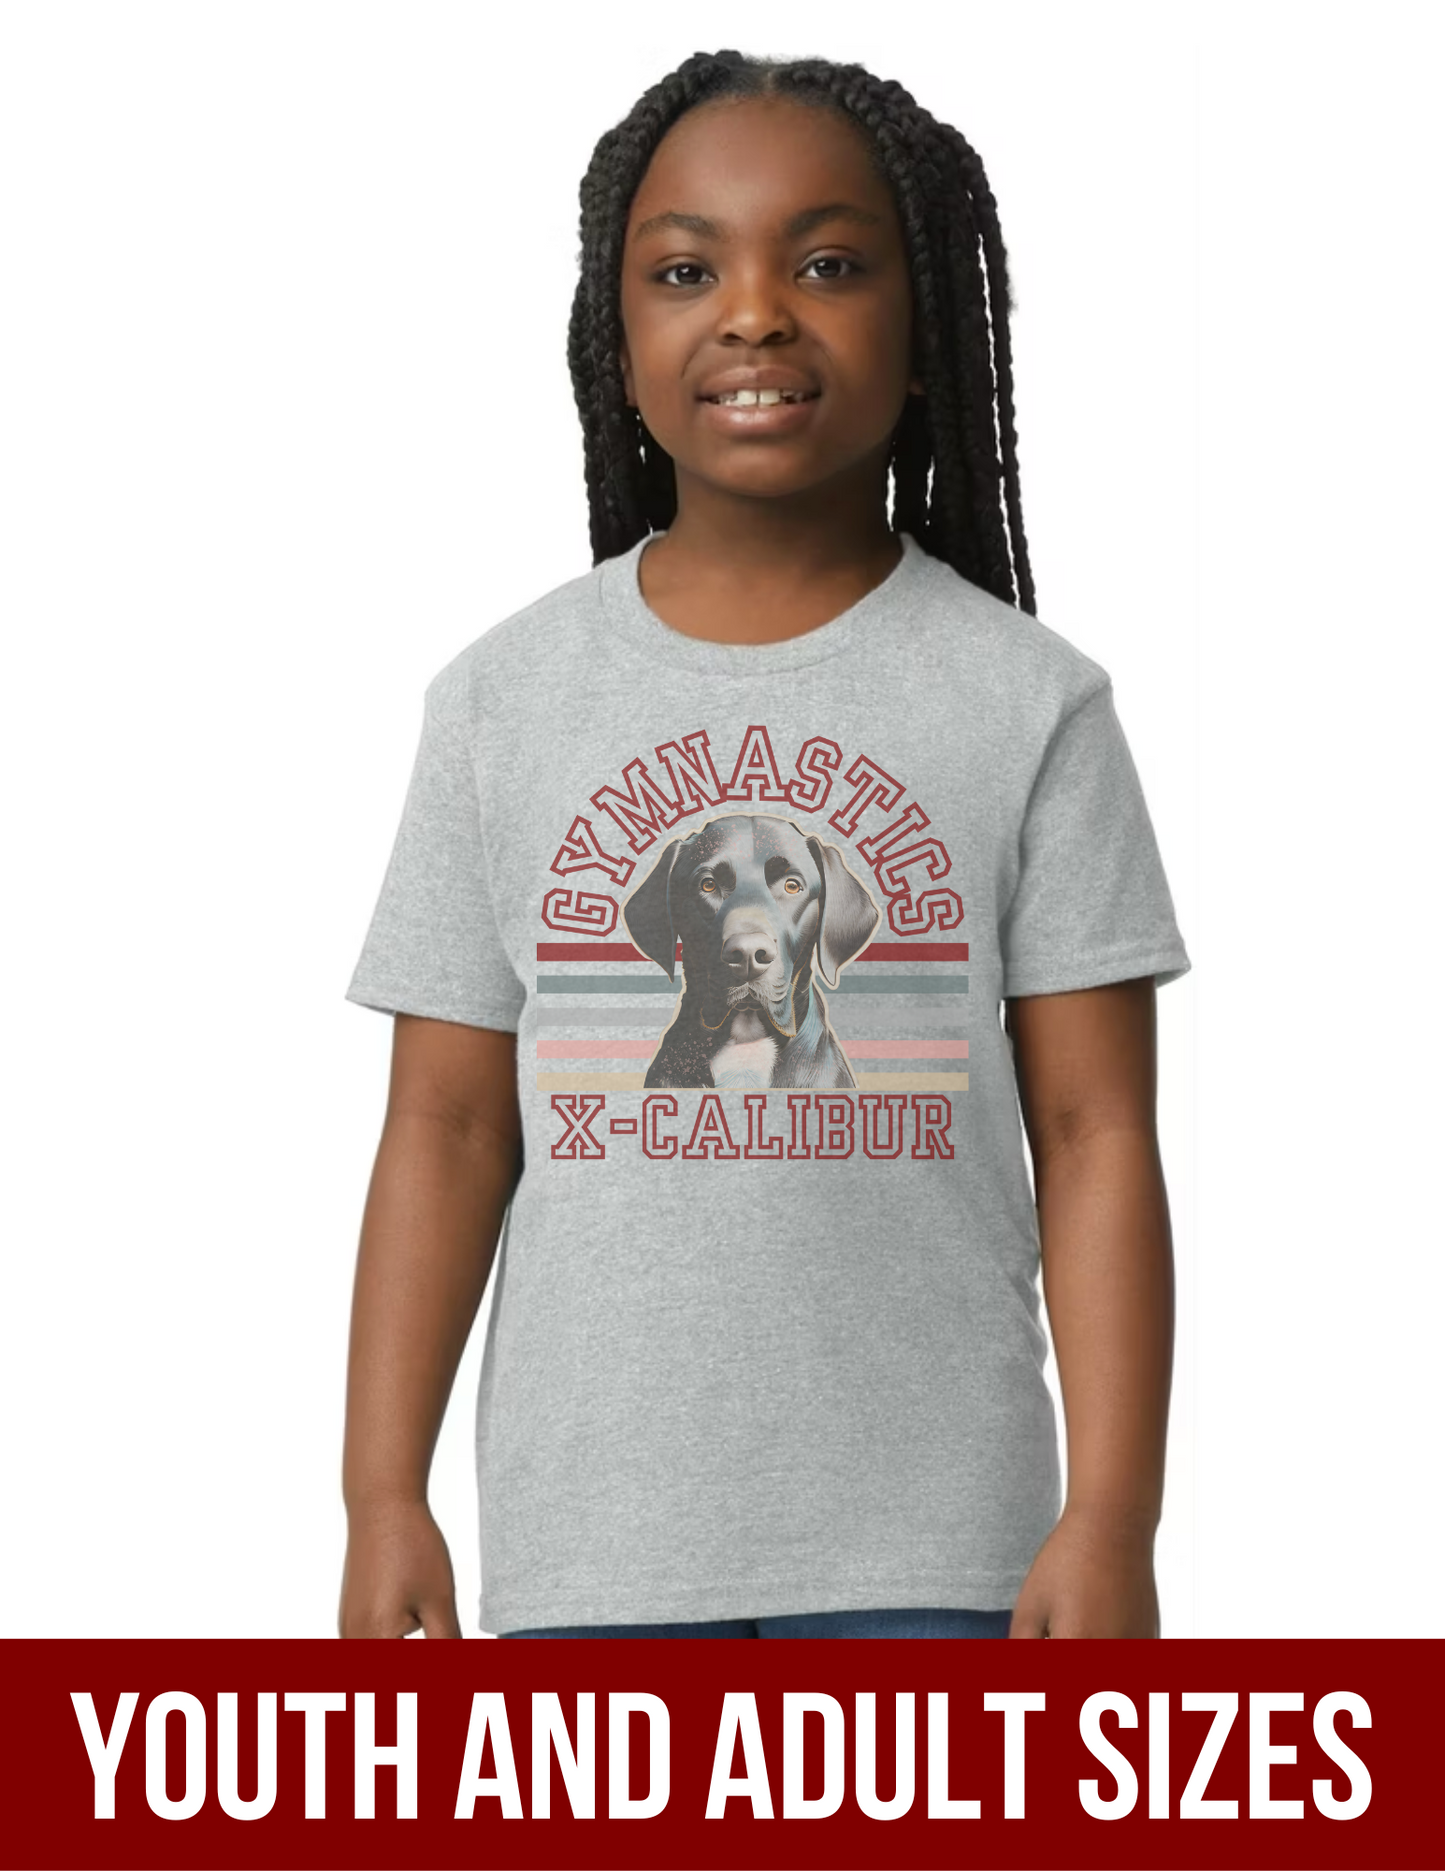 Gymnastics X-Calibur Dog T-shirt-Youth and Adult Sizes